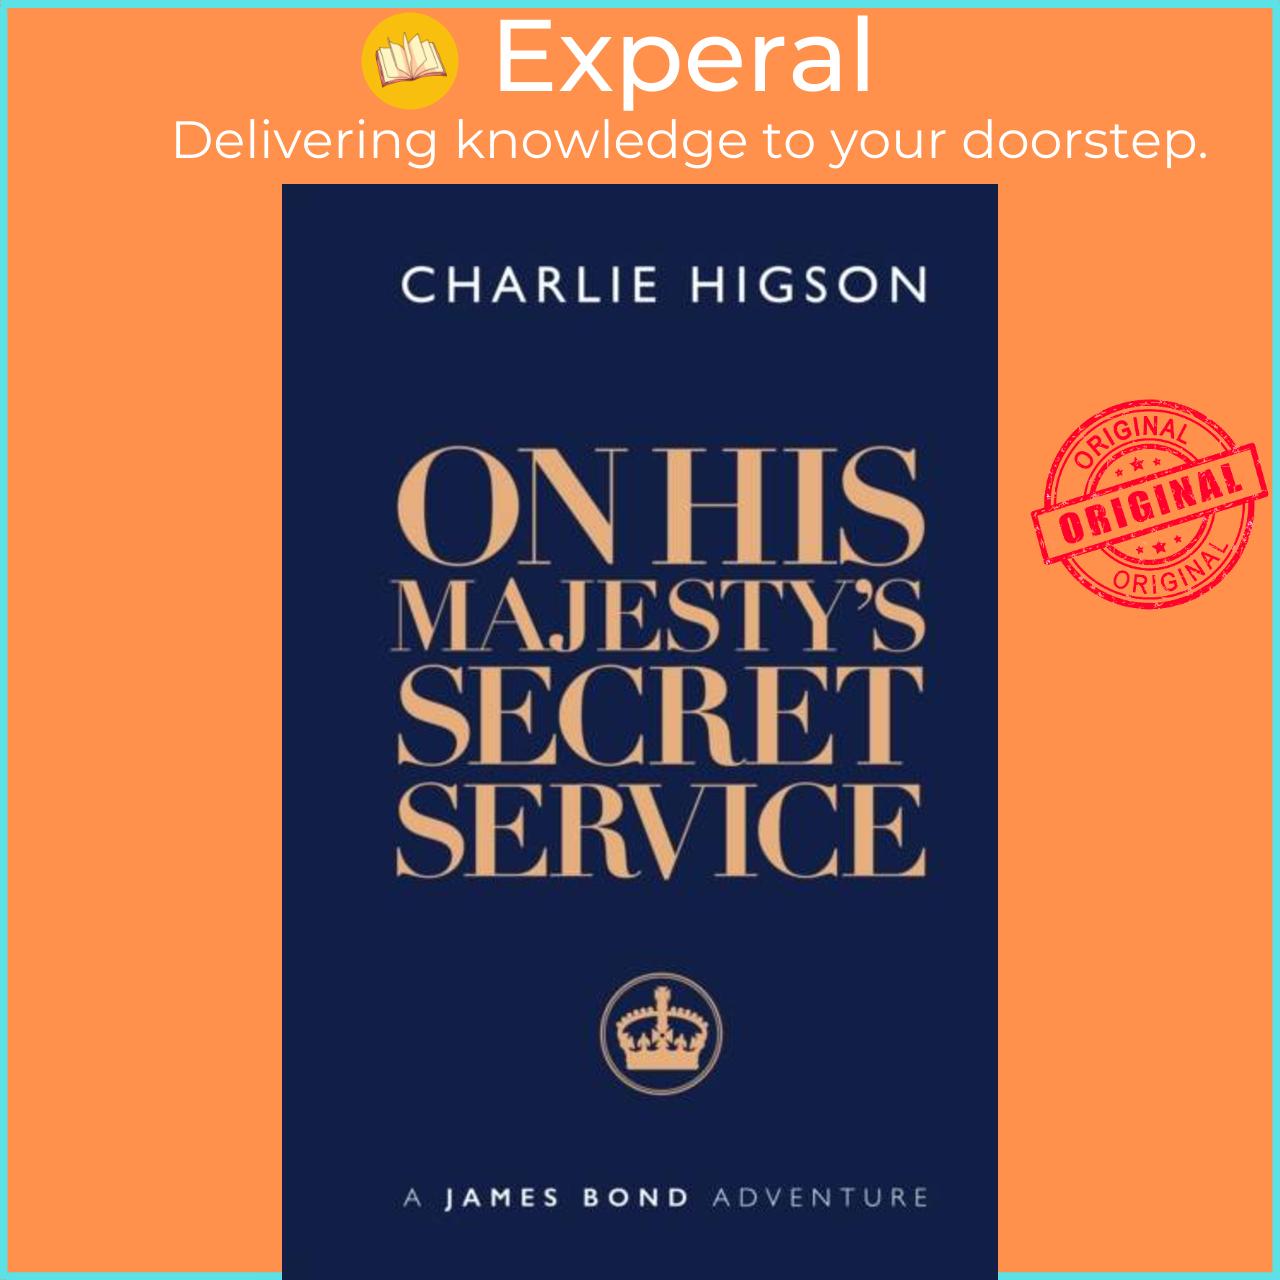 Sách - On His Majesty's Secret Service by Charlie Higson (UK edition, hardcover)